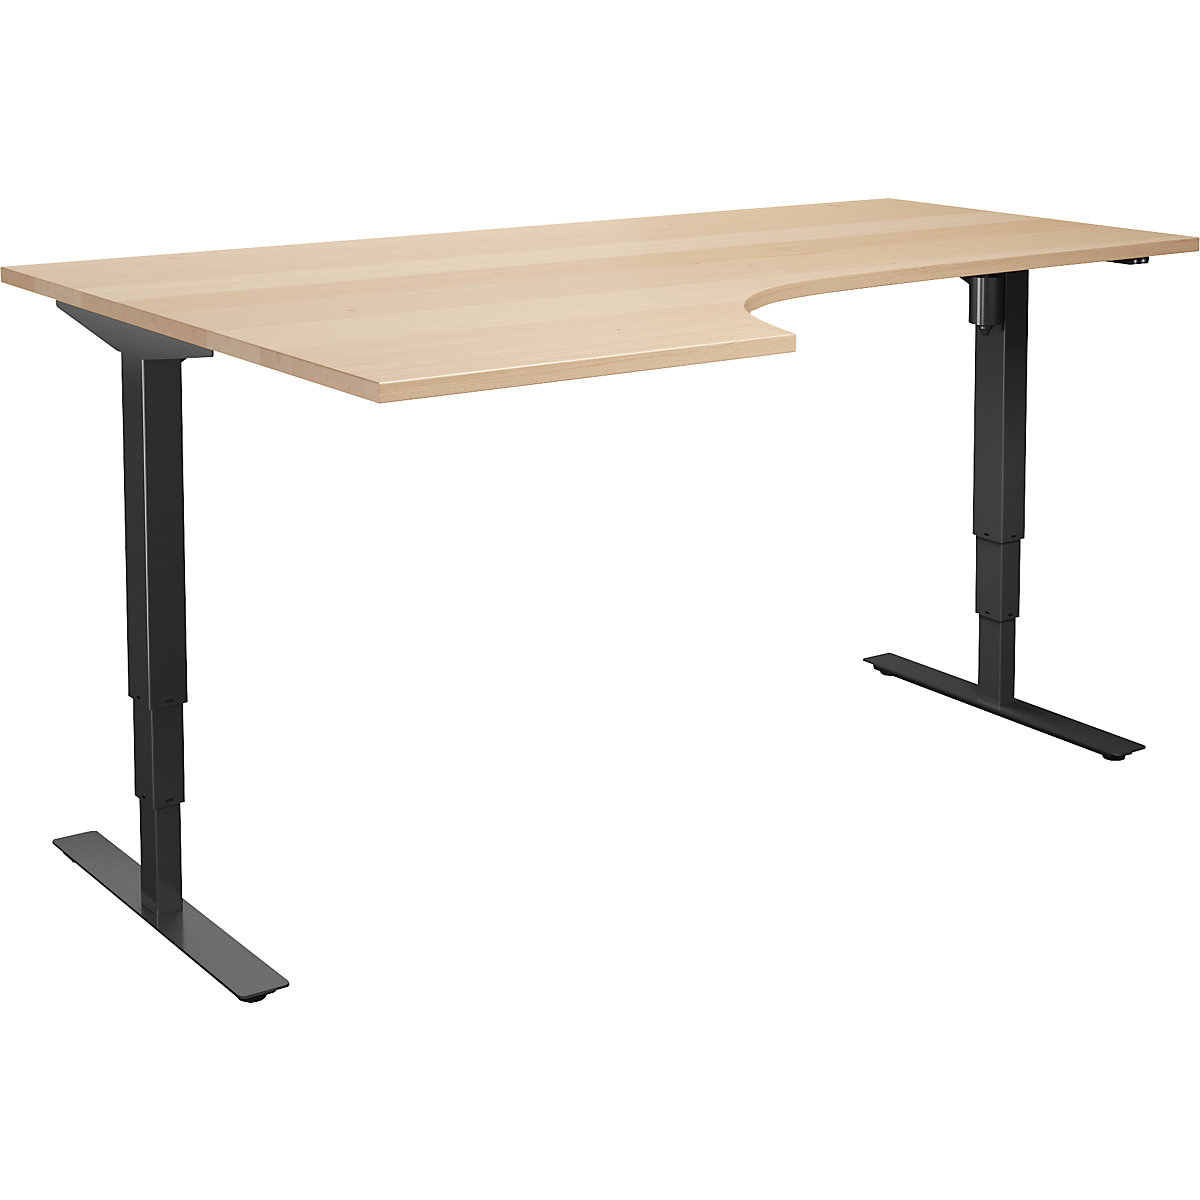 Atlanta desk, electrically height adjustable